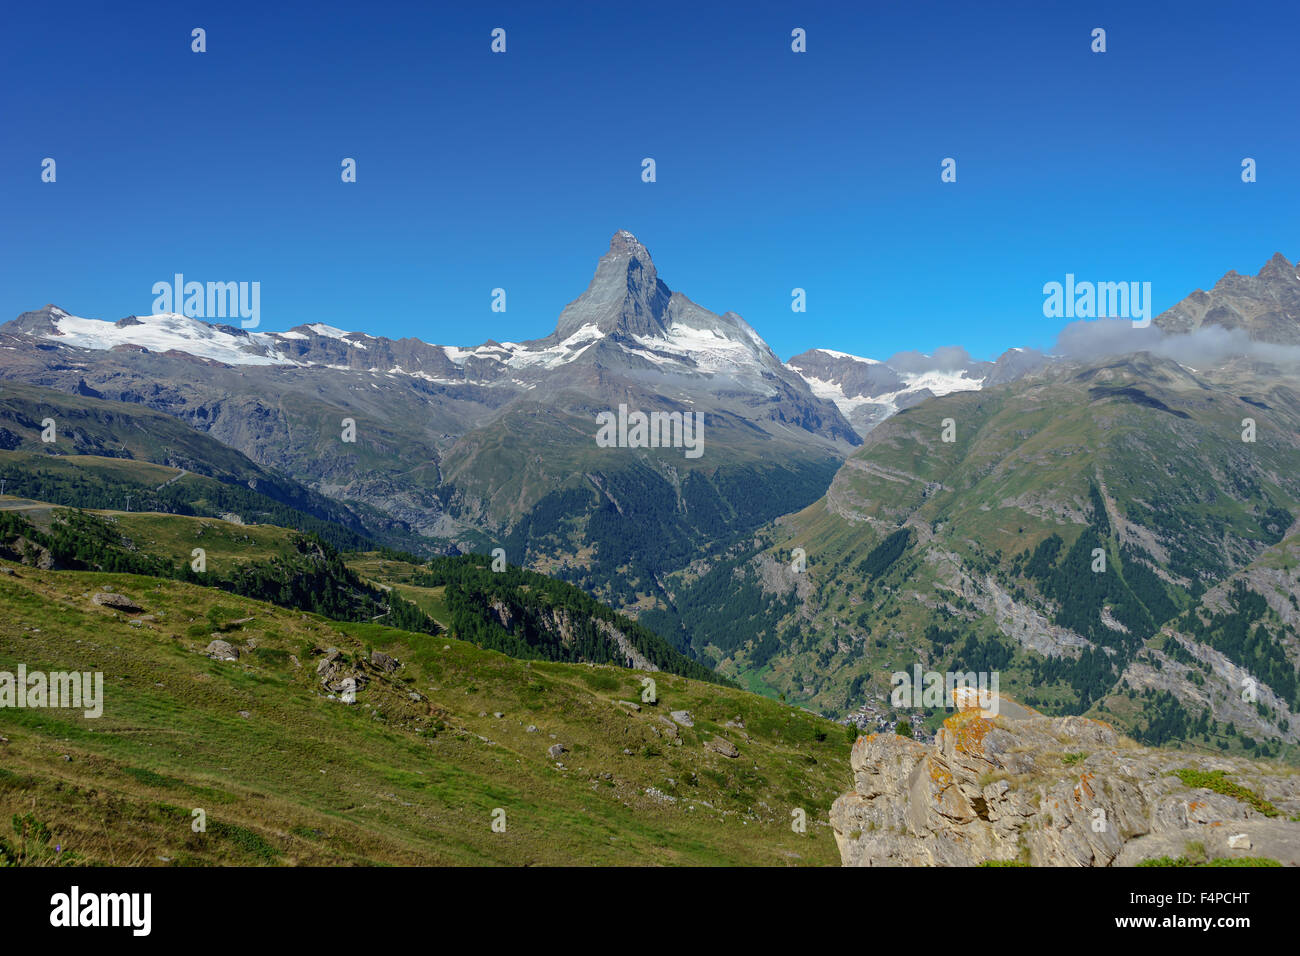 The mountain range of Matterhorn in the the Swiss Alps. July, 2015. Matterhorn, Switzerland. Stock Photo